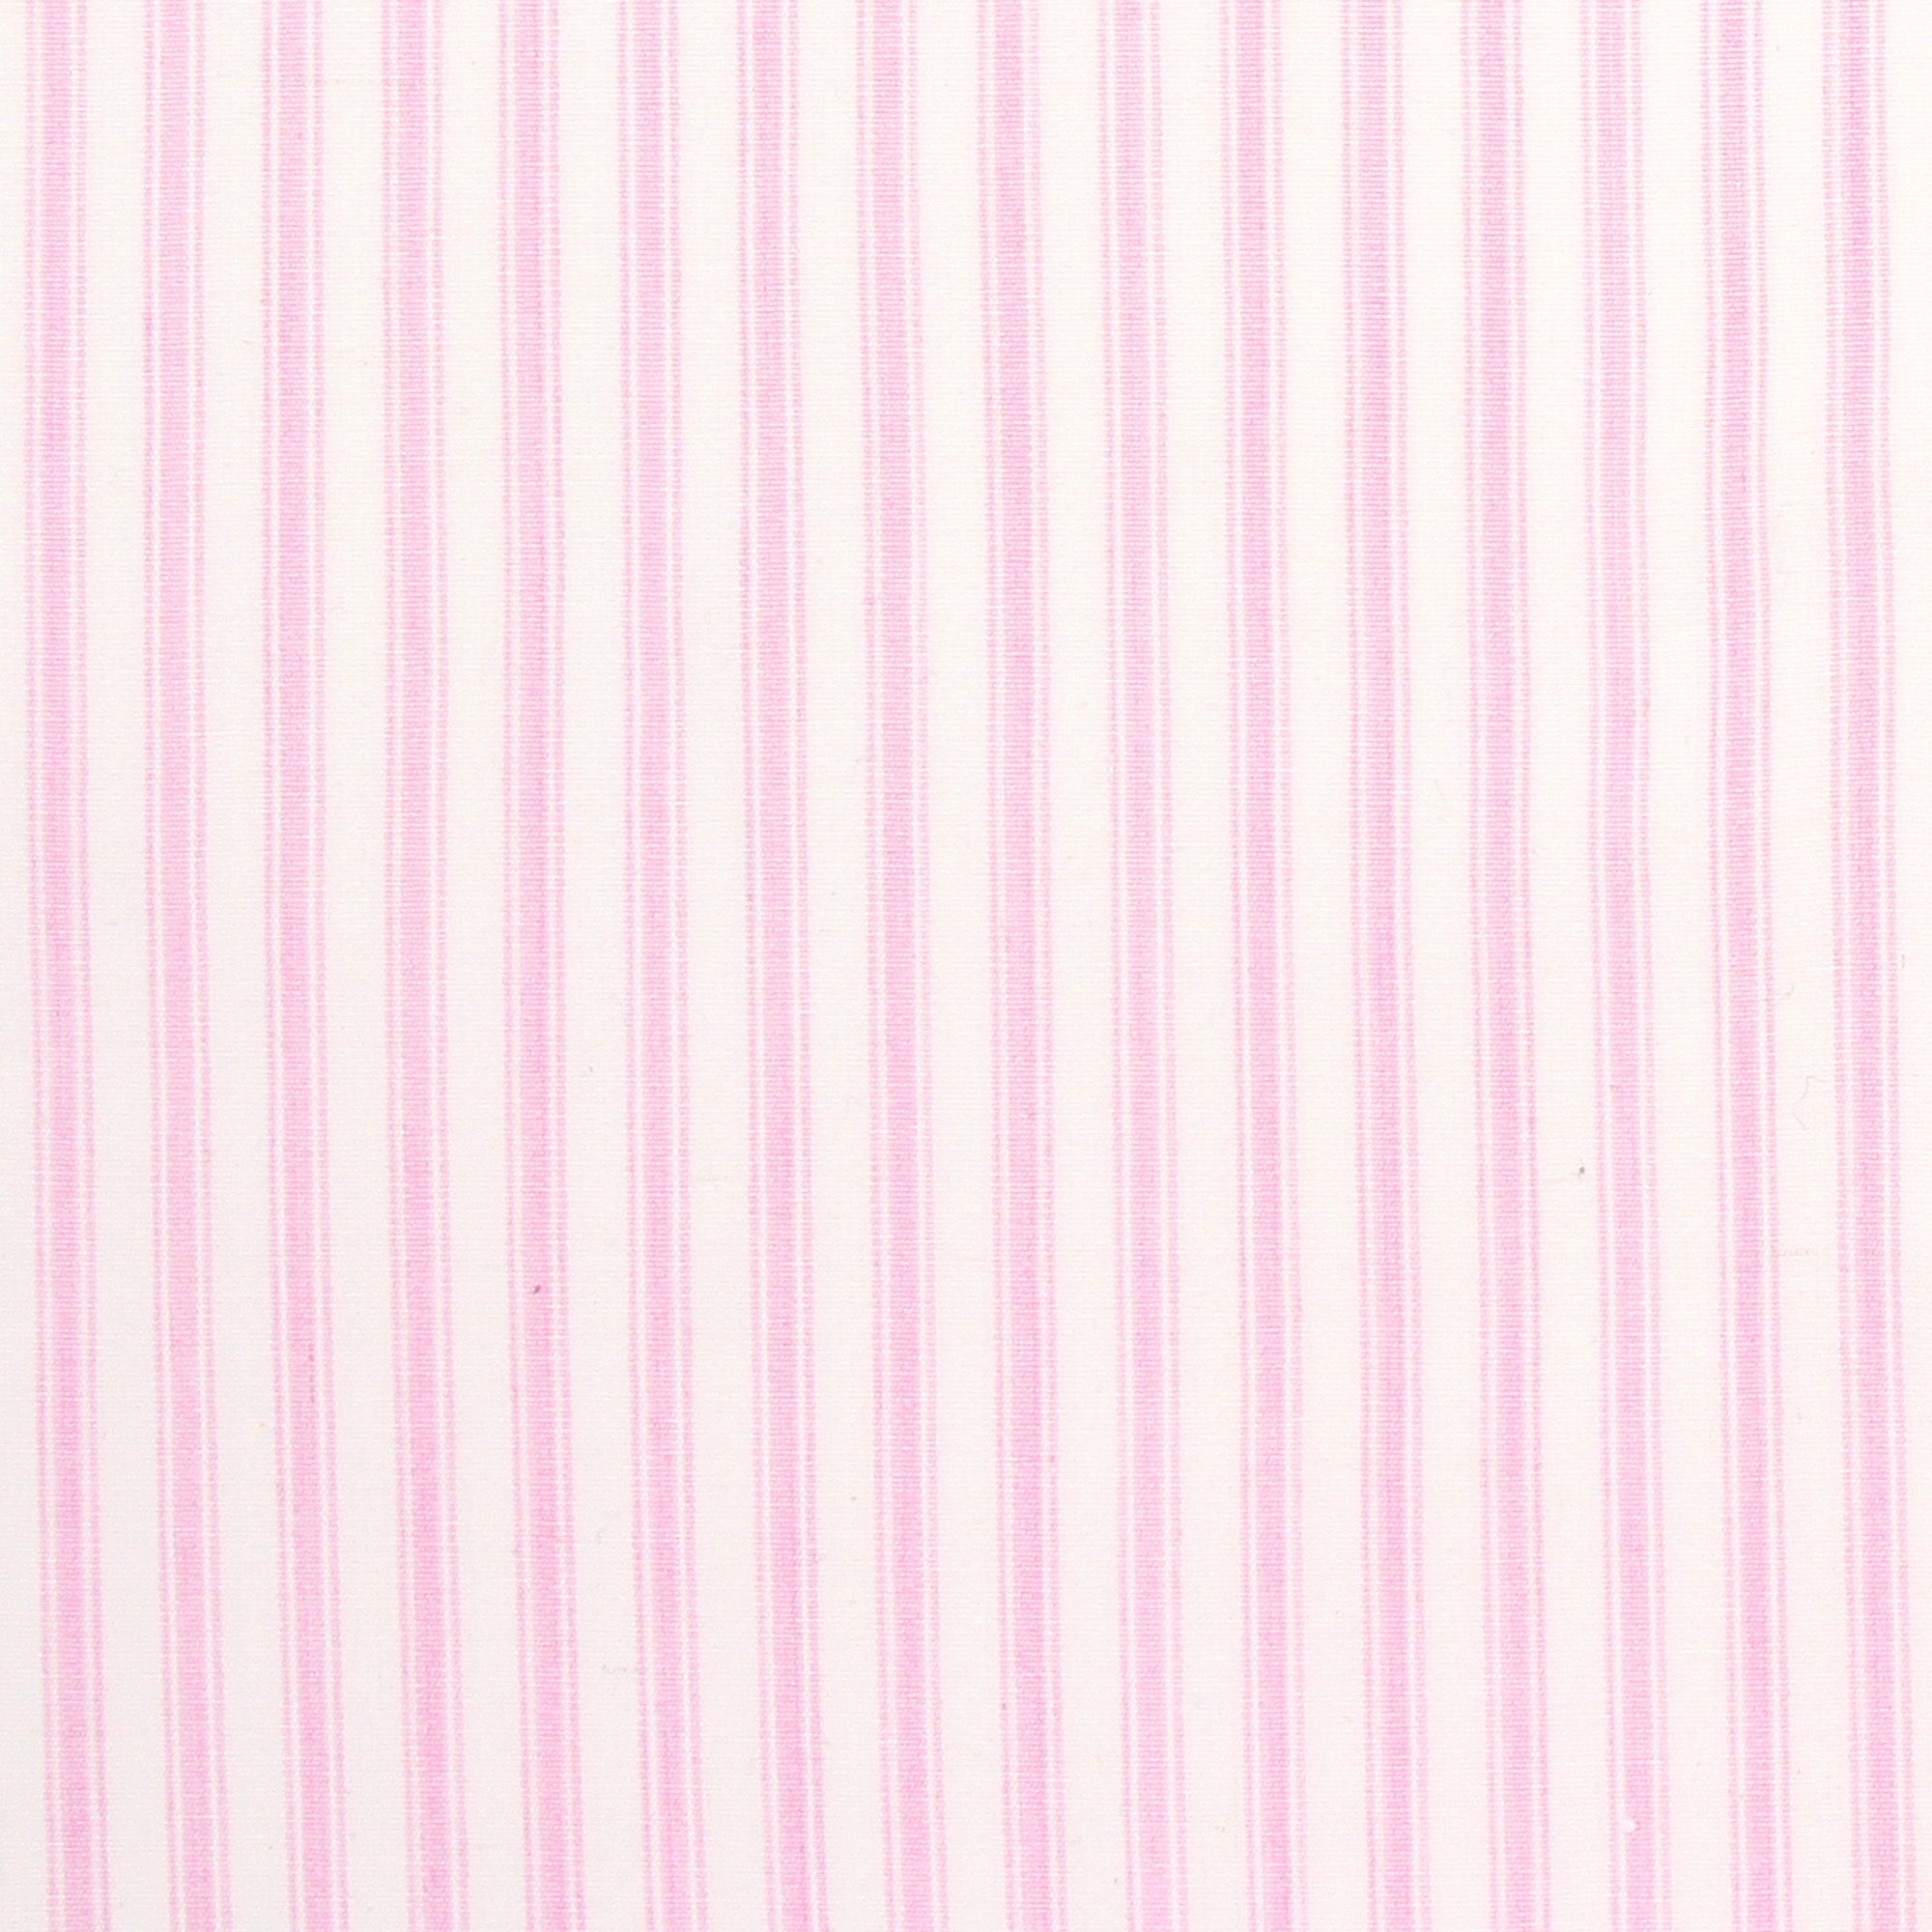 Parish Stripe Fabric in Pink Cotton Ticking Piece 5